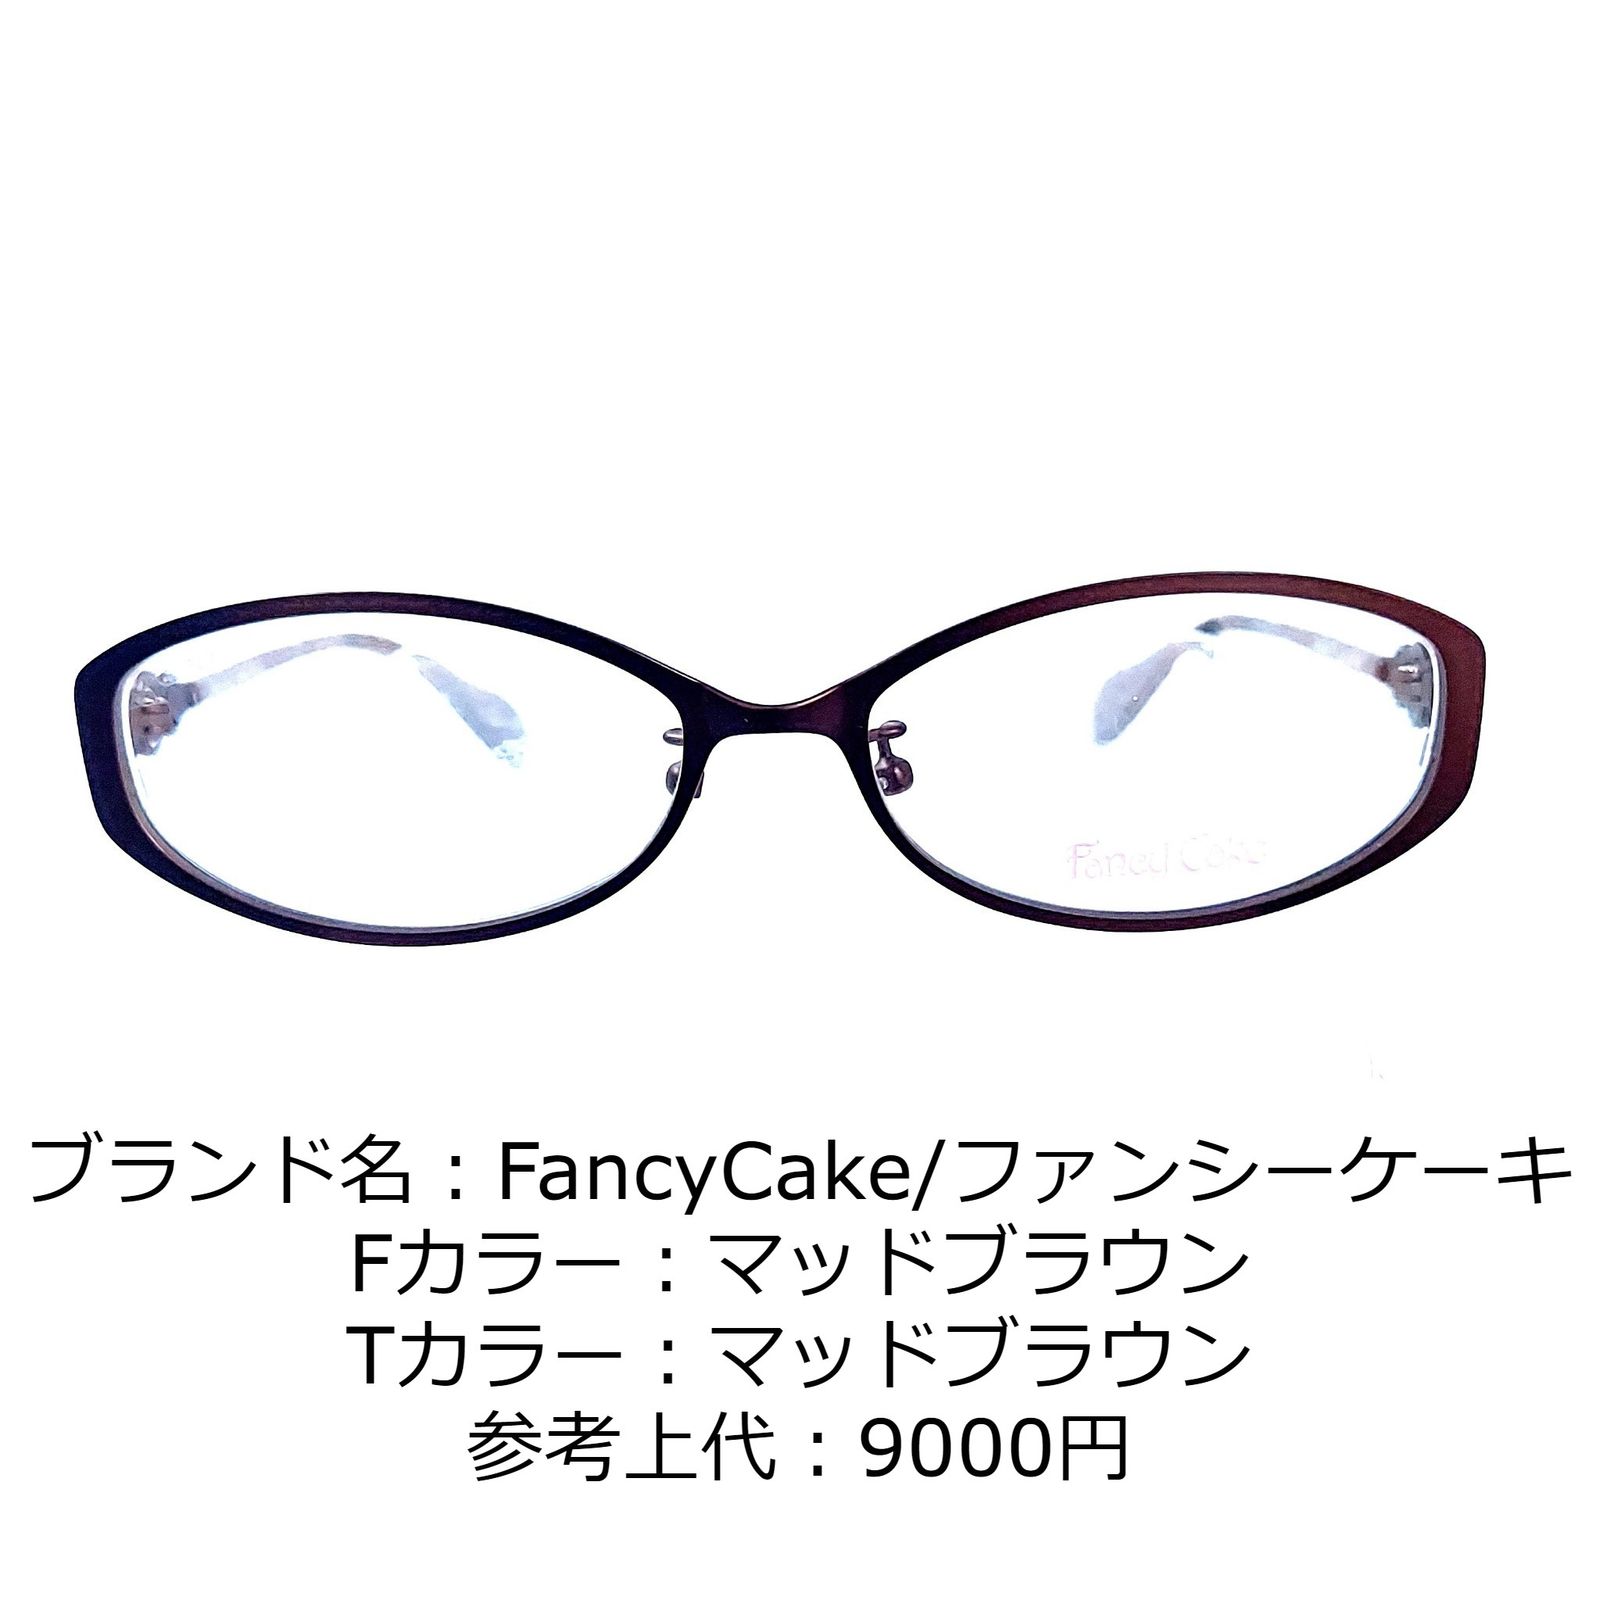 No.1132-メガネ Fancy Cake【フレームのみ価格】 | hartwellspremium.com